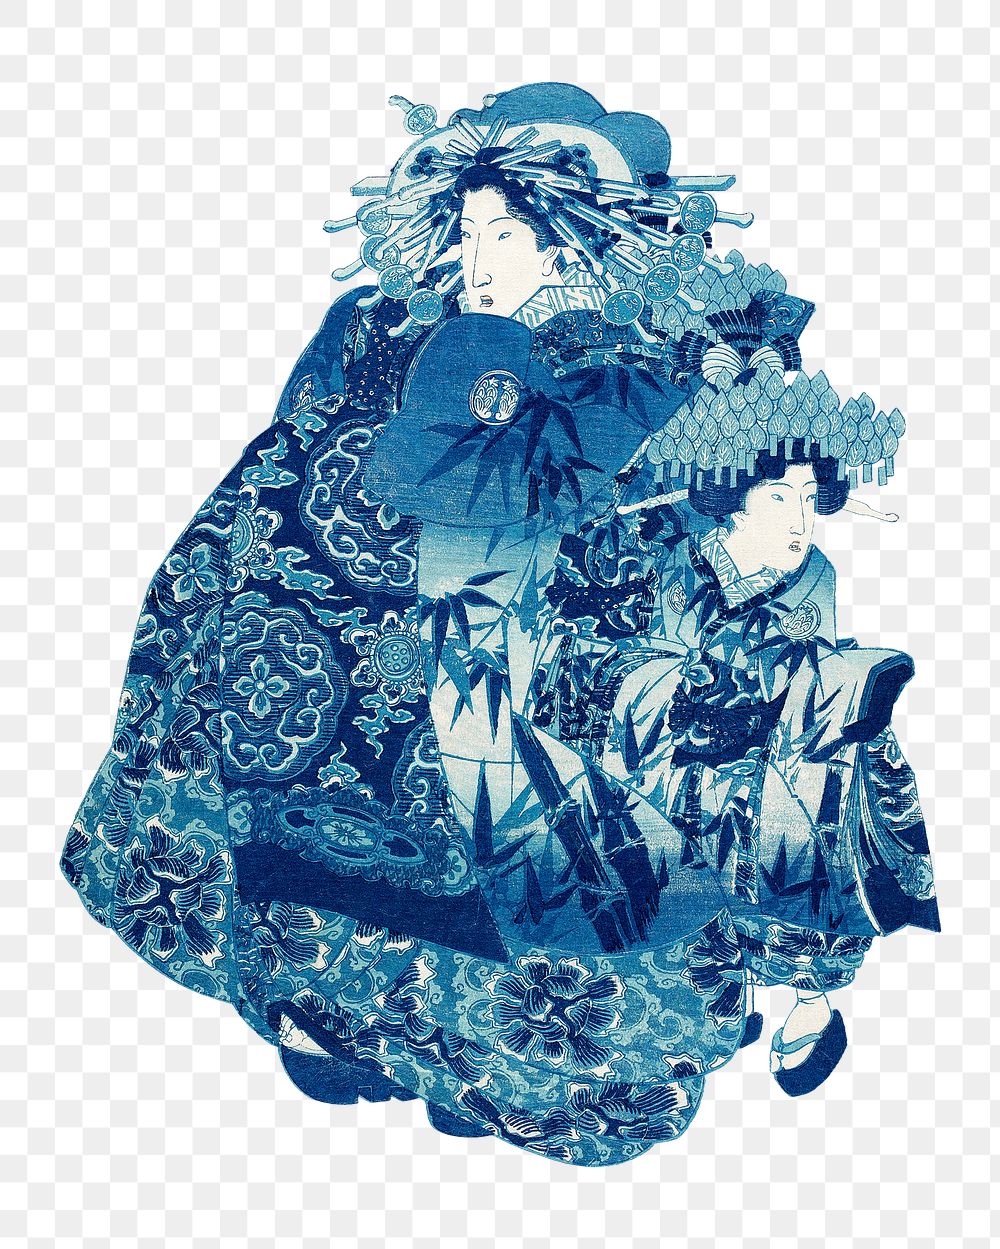 PNG Blue Japanese woman, vintage illustration by Utagawa Kunisada, transparent background. Remixed by rawpixel.